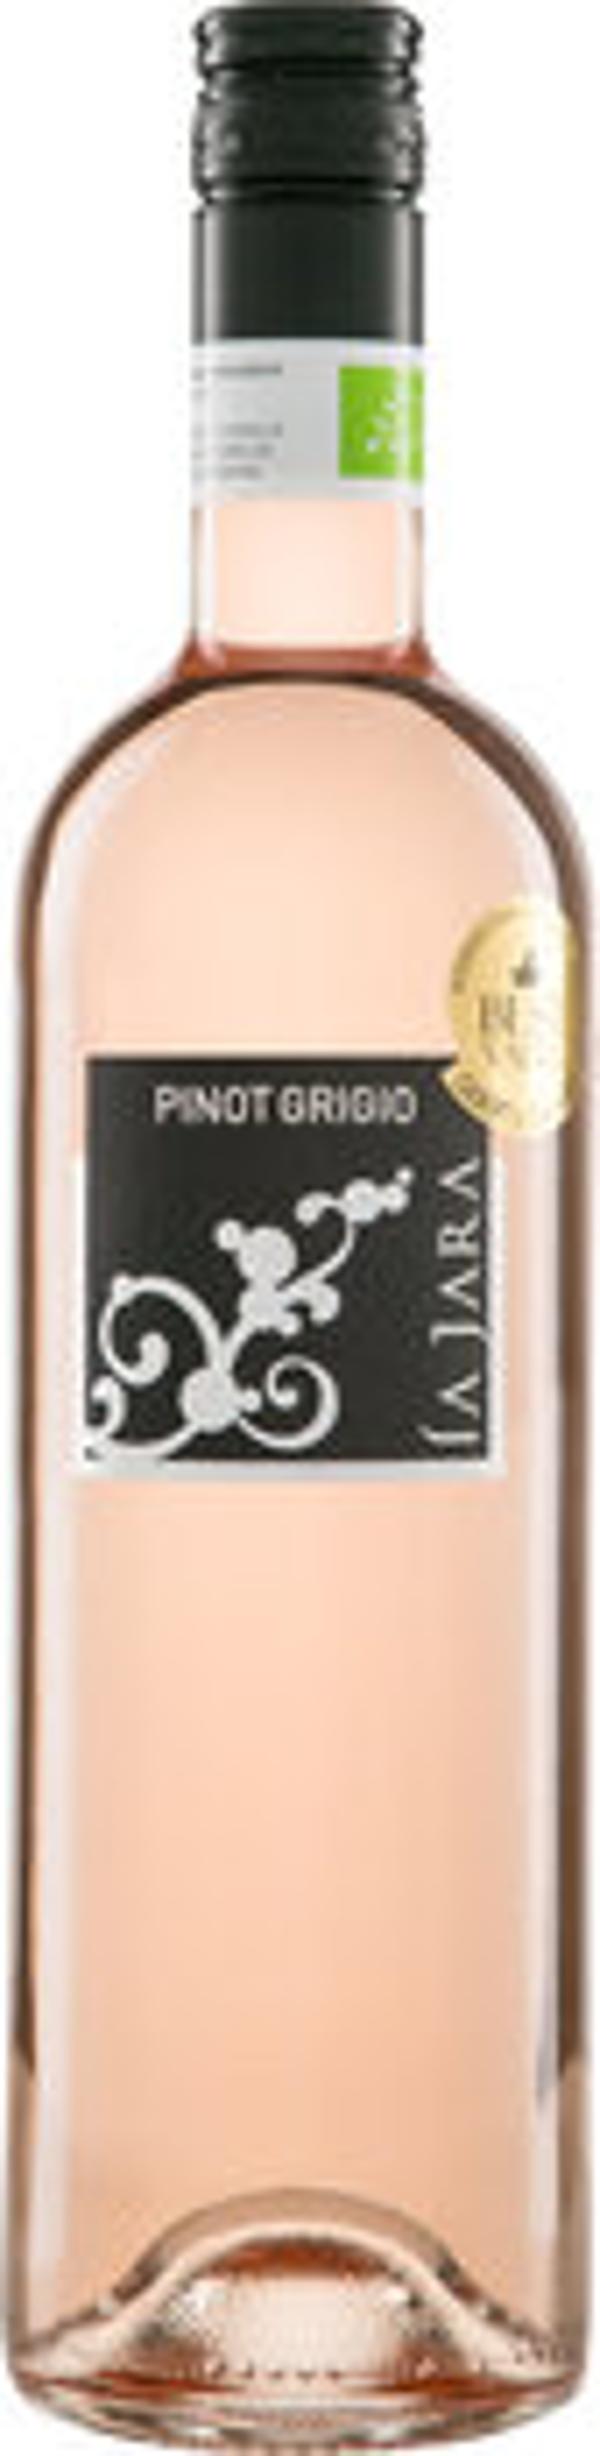 Produktfoto zu Pinot Grigio Rosé delle Venezi